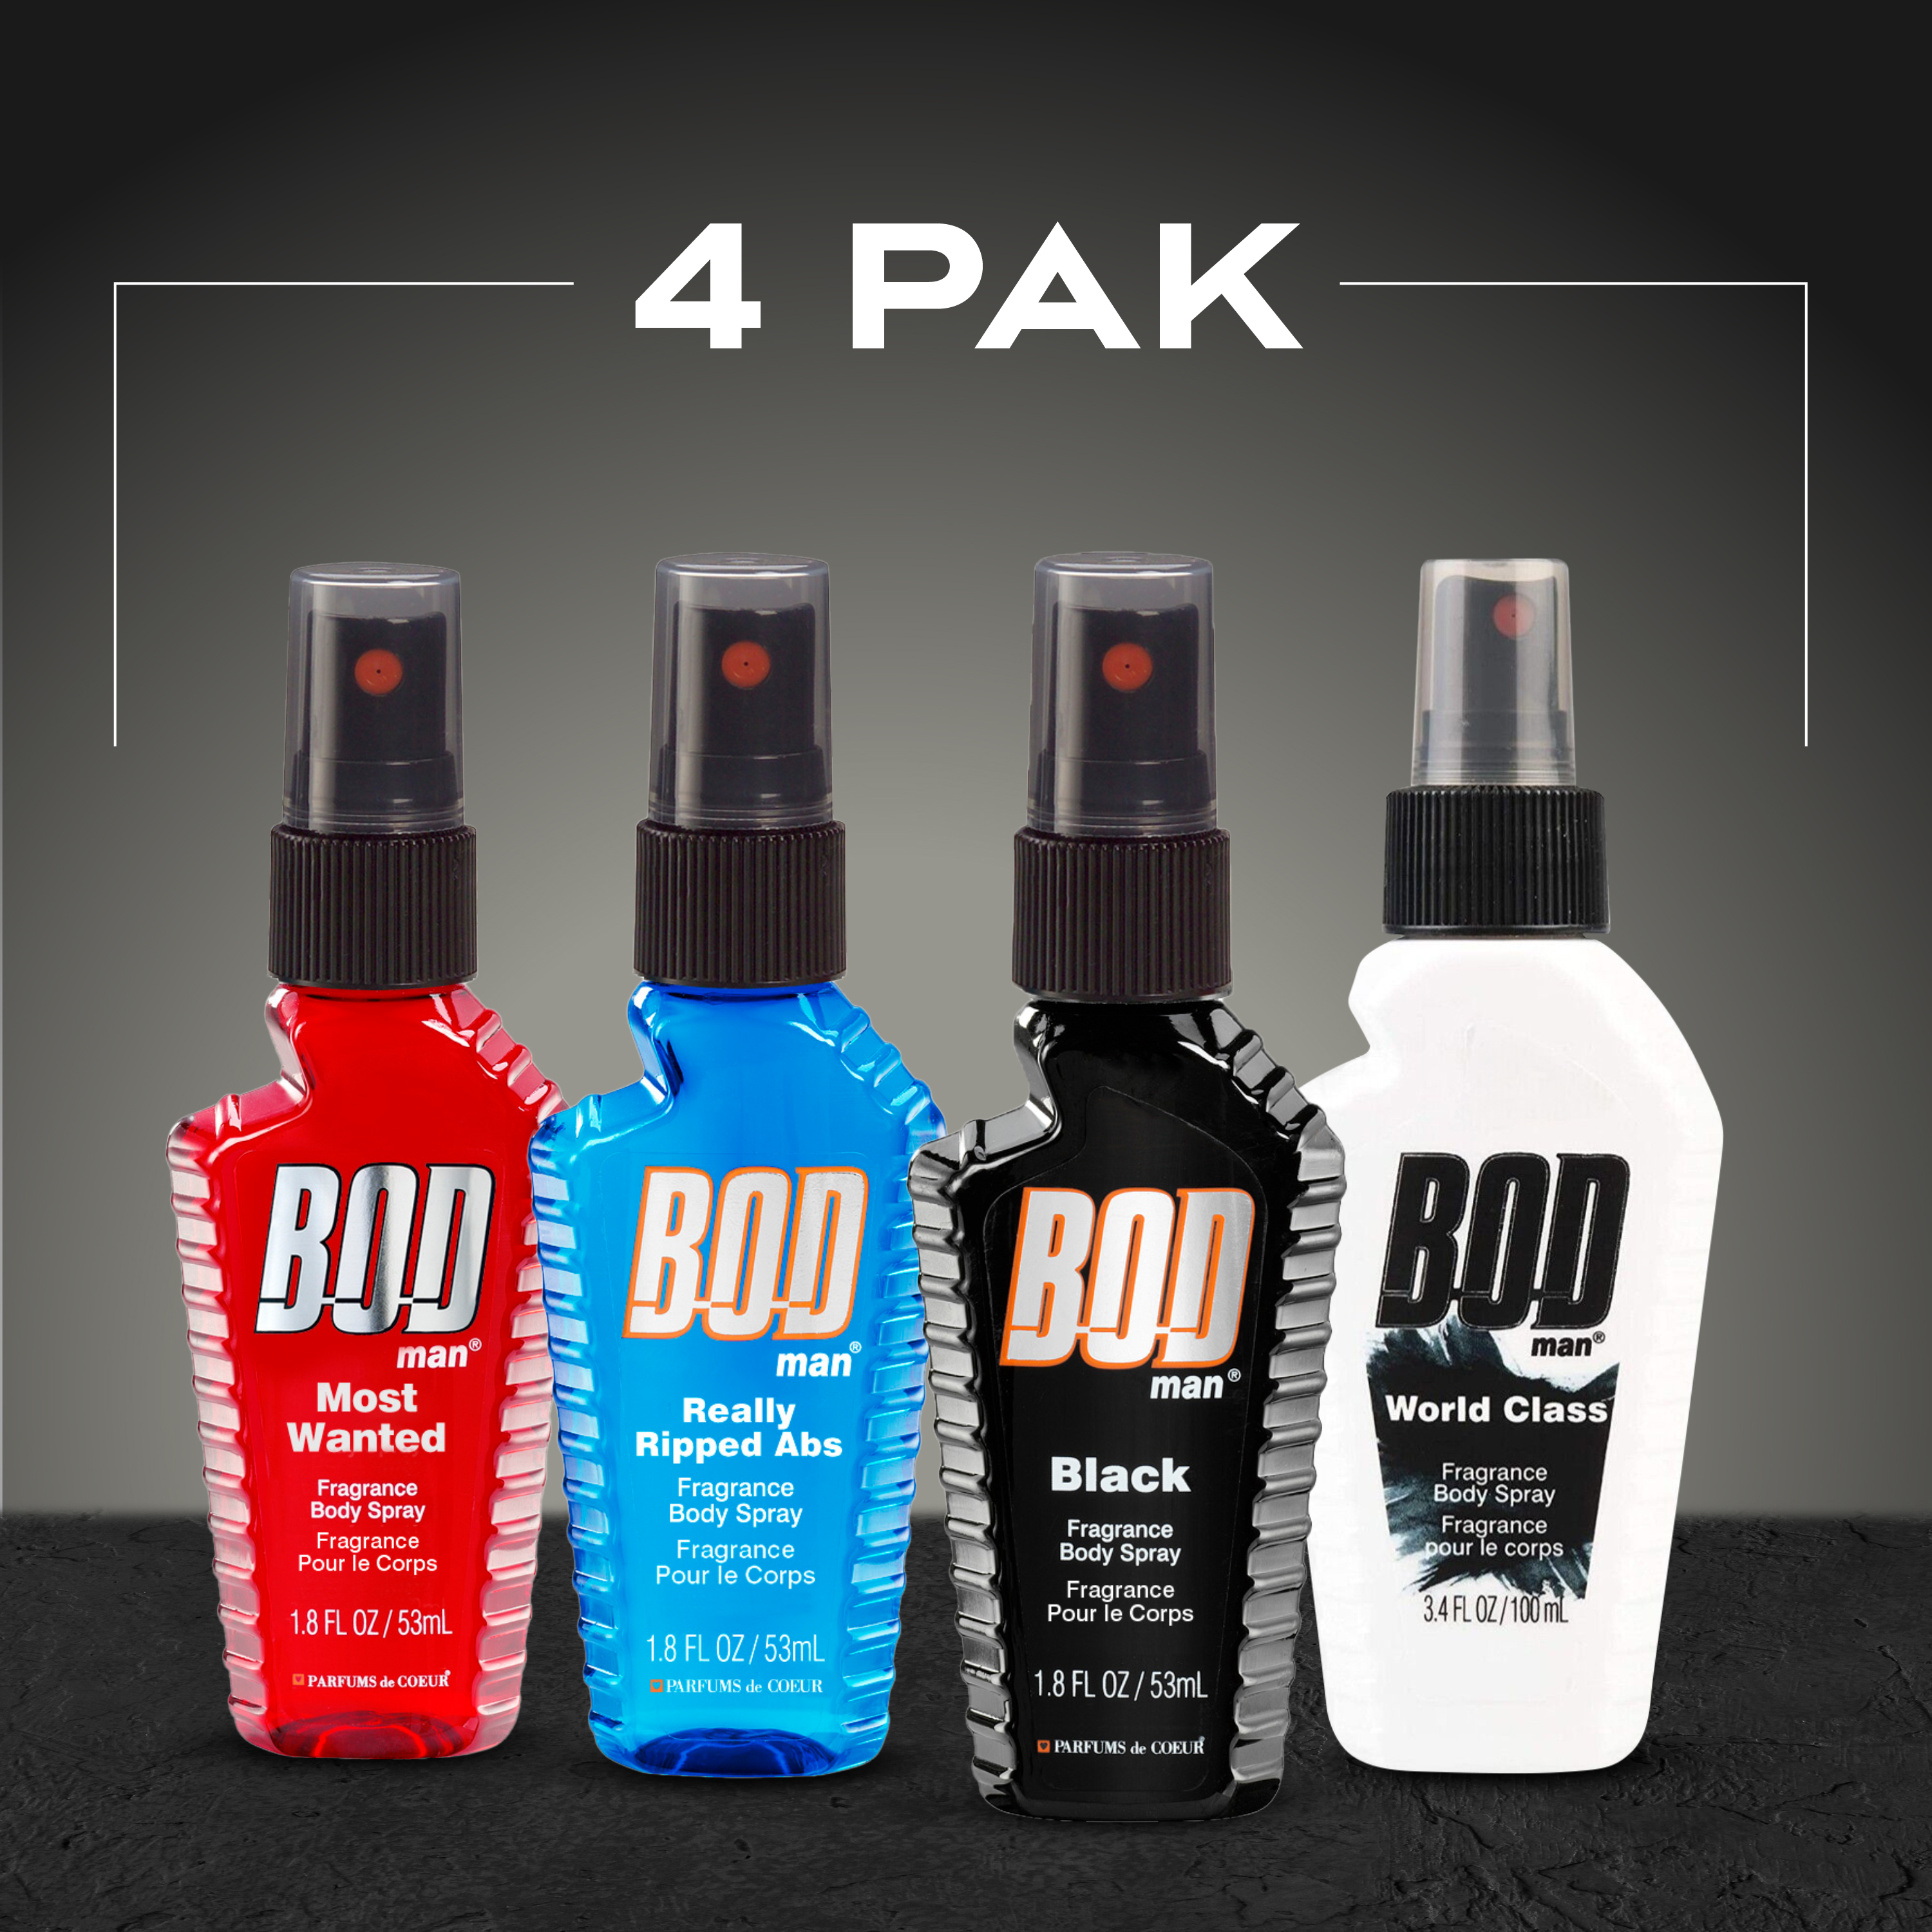 BOD Man Fragrance Body Spray, Mini Gift Set, 1.8 oz, 4 Pack - image 3 of 9